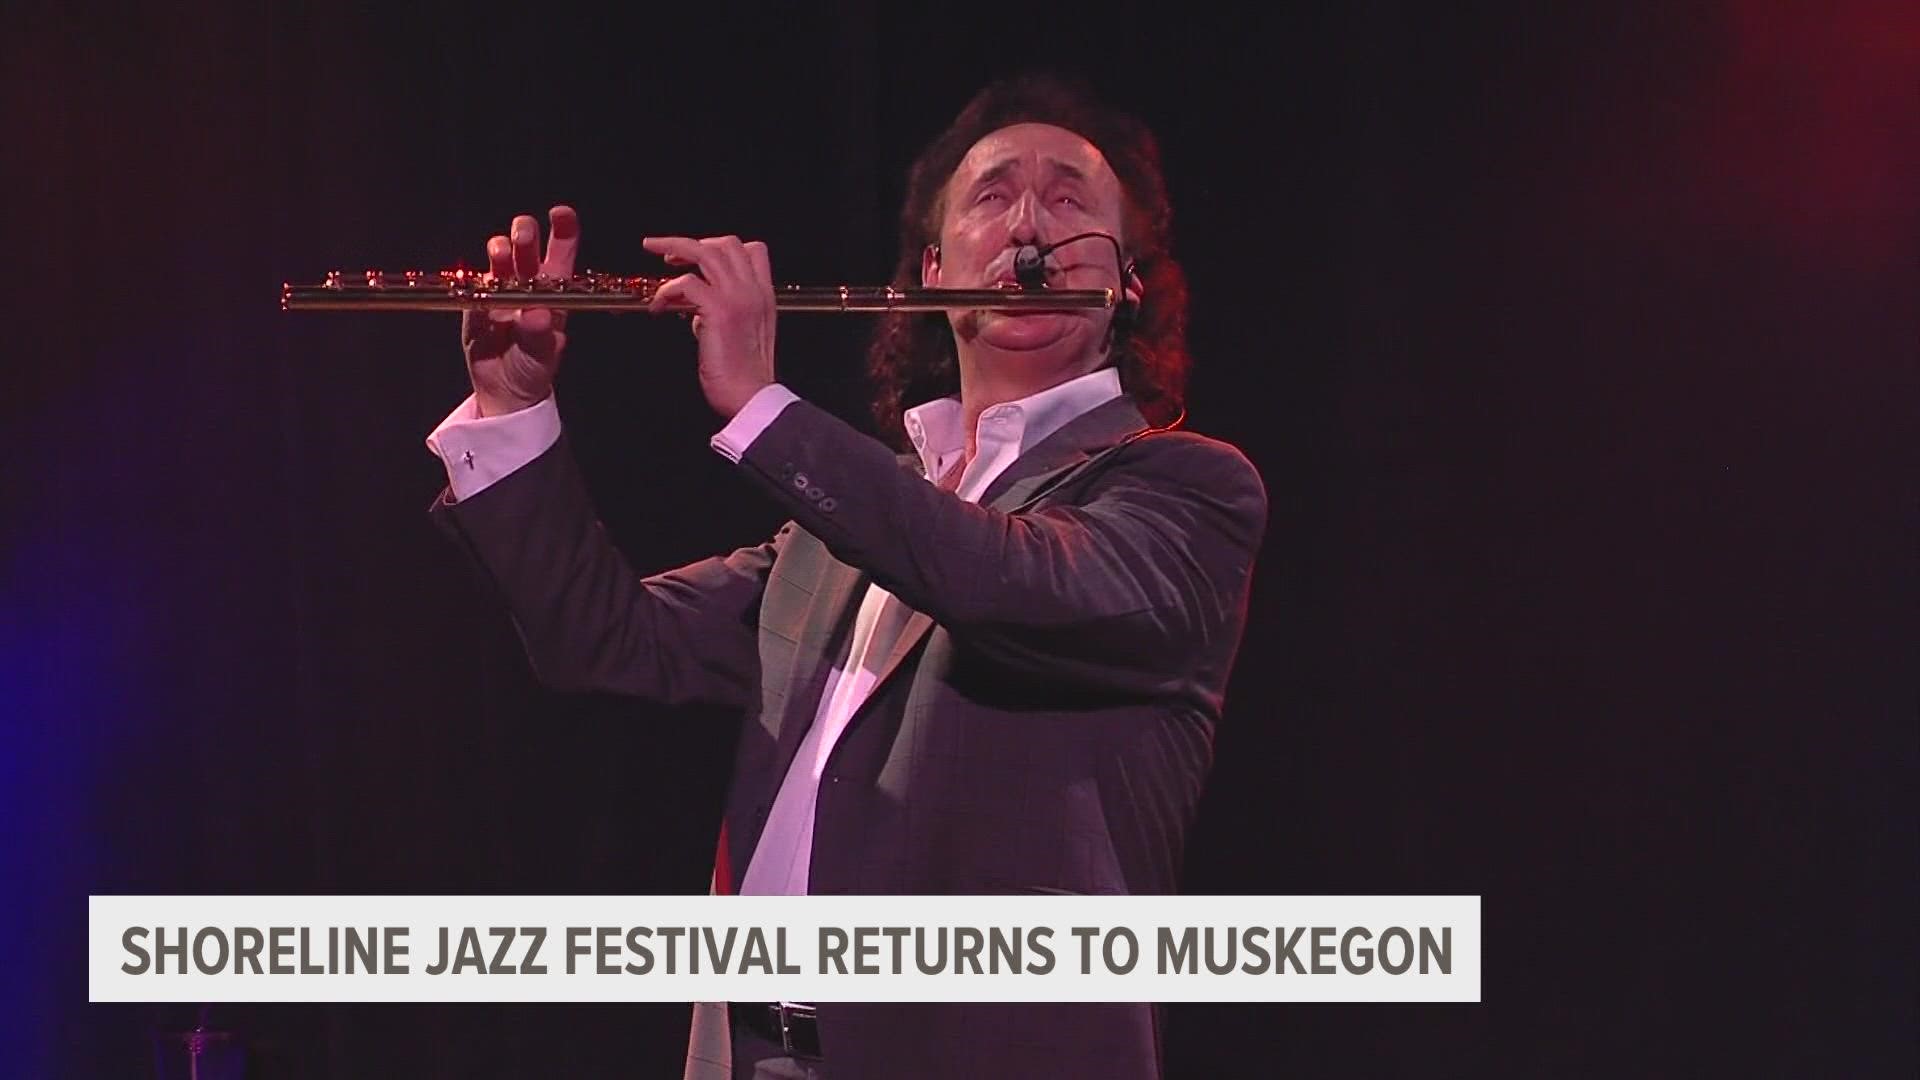 Shoreline Jazz Festival returns to Muskegon after hiatus